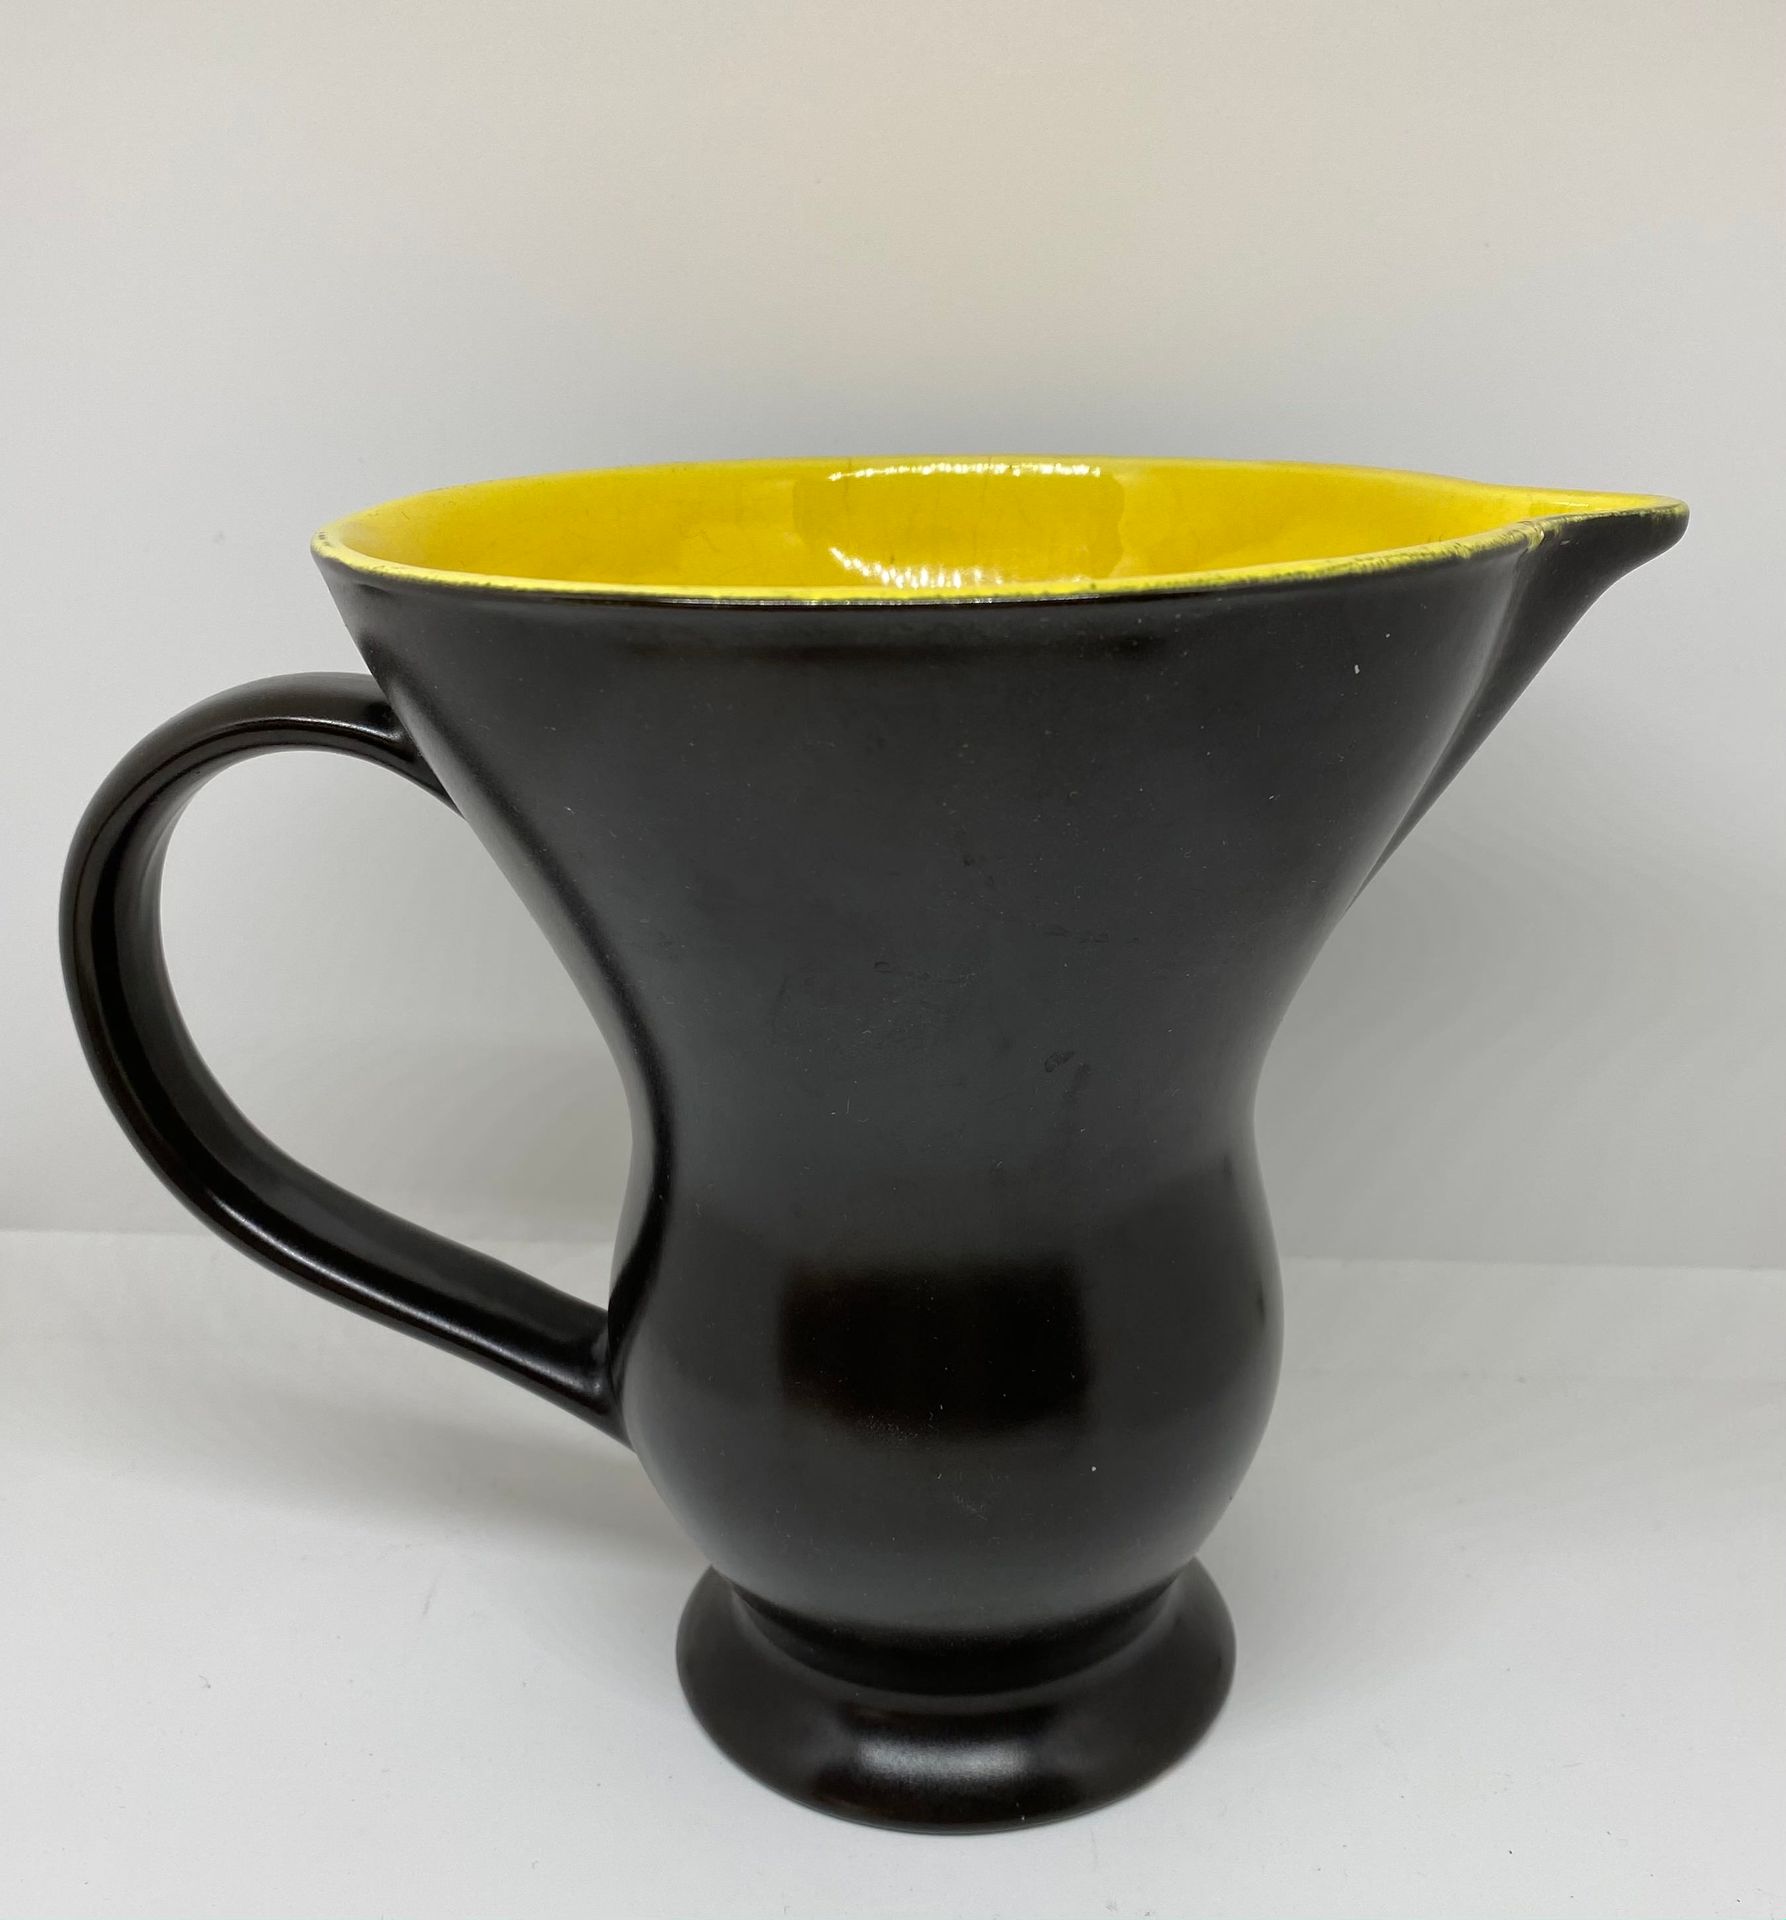 Null 迪戈因-萨里戈明斯

黑色釉面陶瓷壶，黄色内壁。

H.18,5厘米

底部的一个缺口